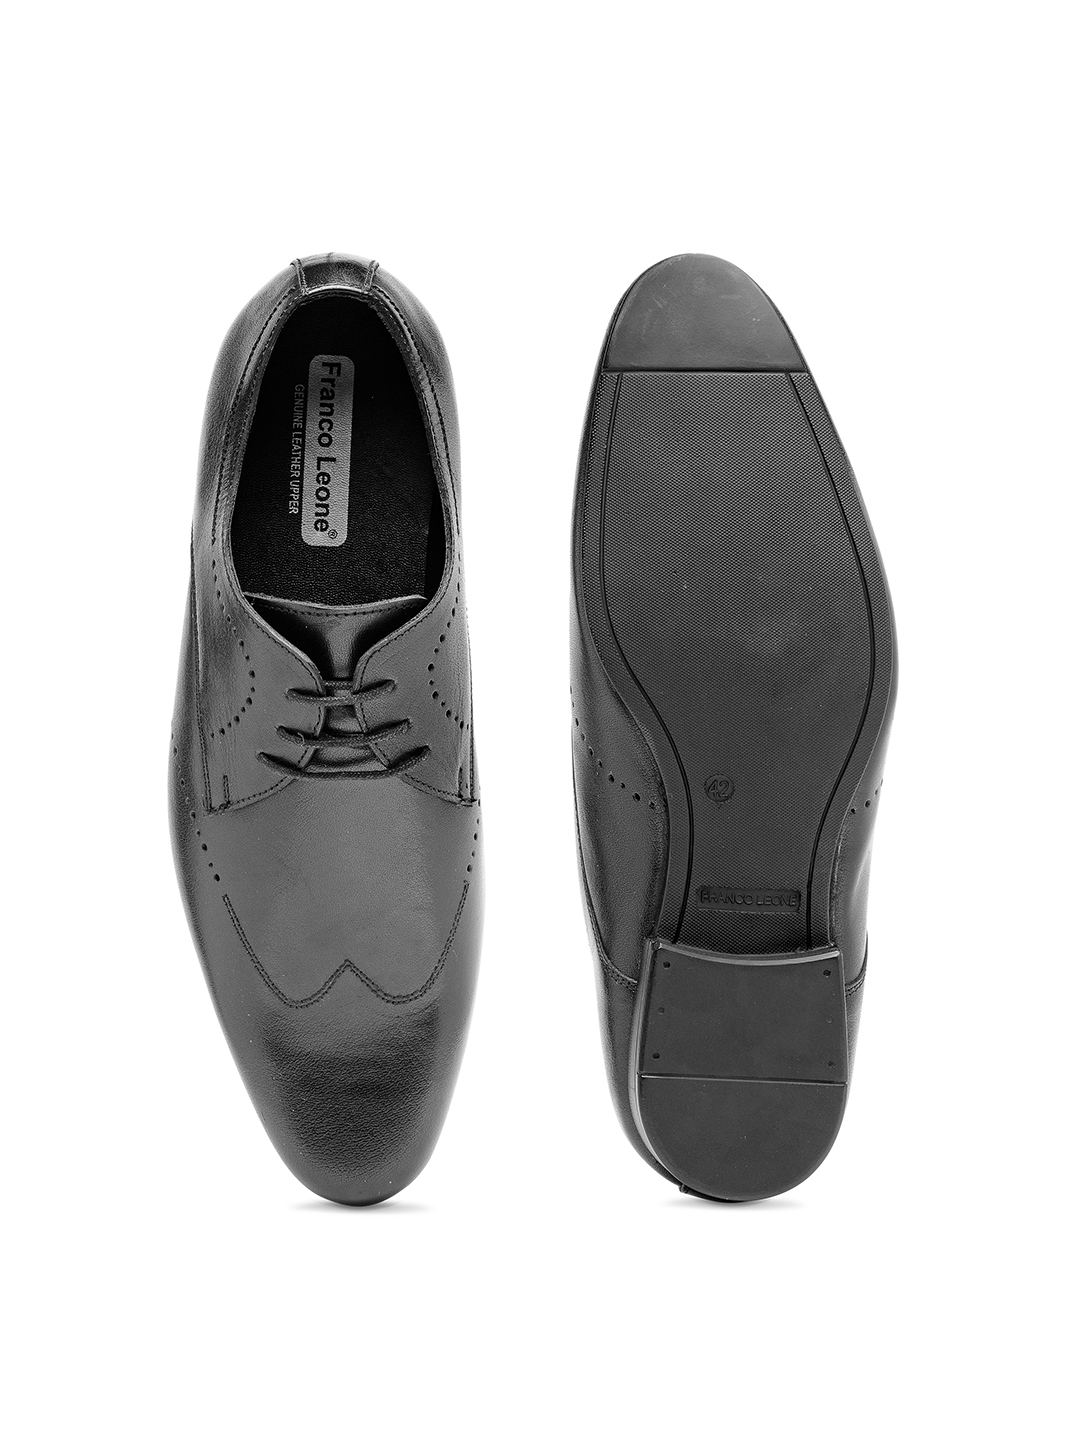 Men Black Leather Formal Shoes by Franco Leone